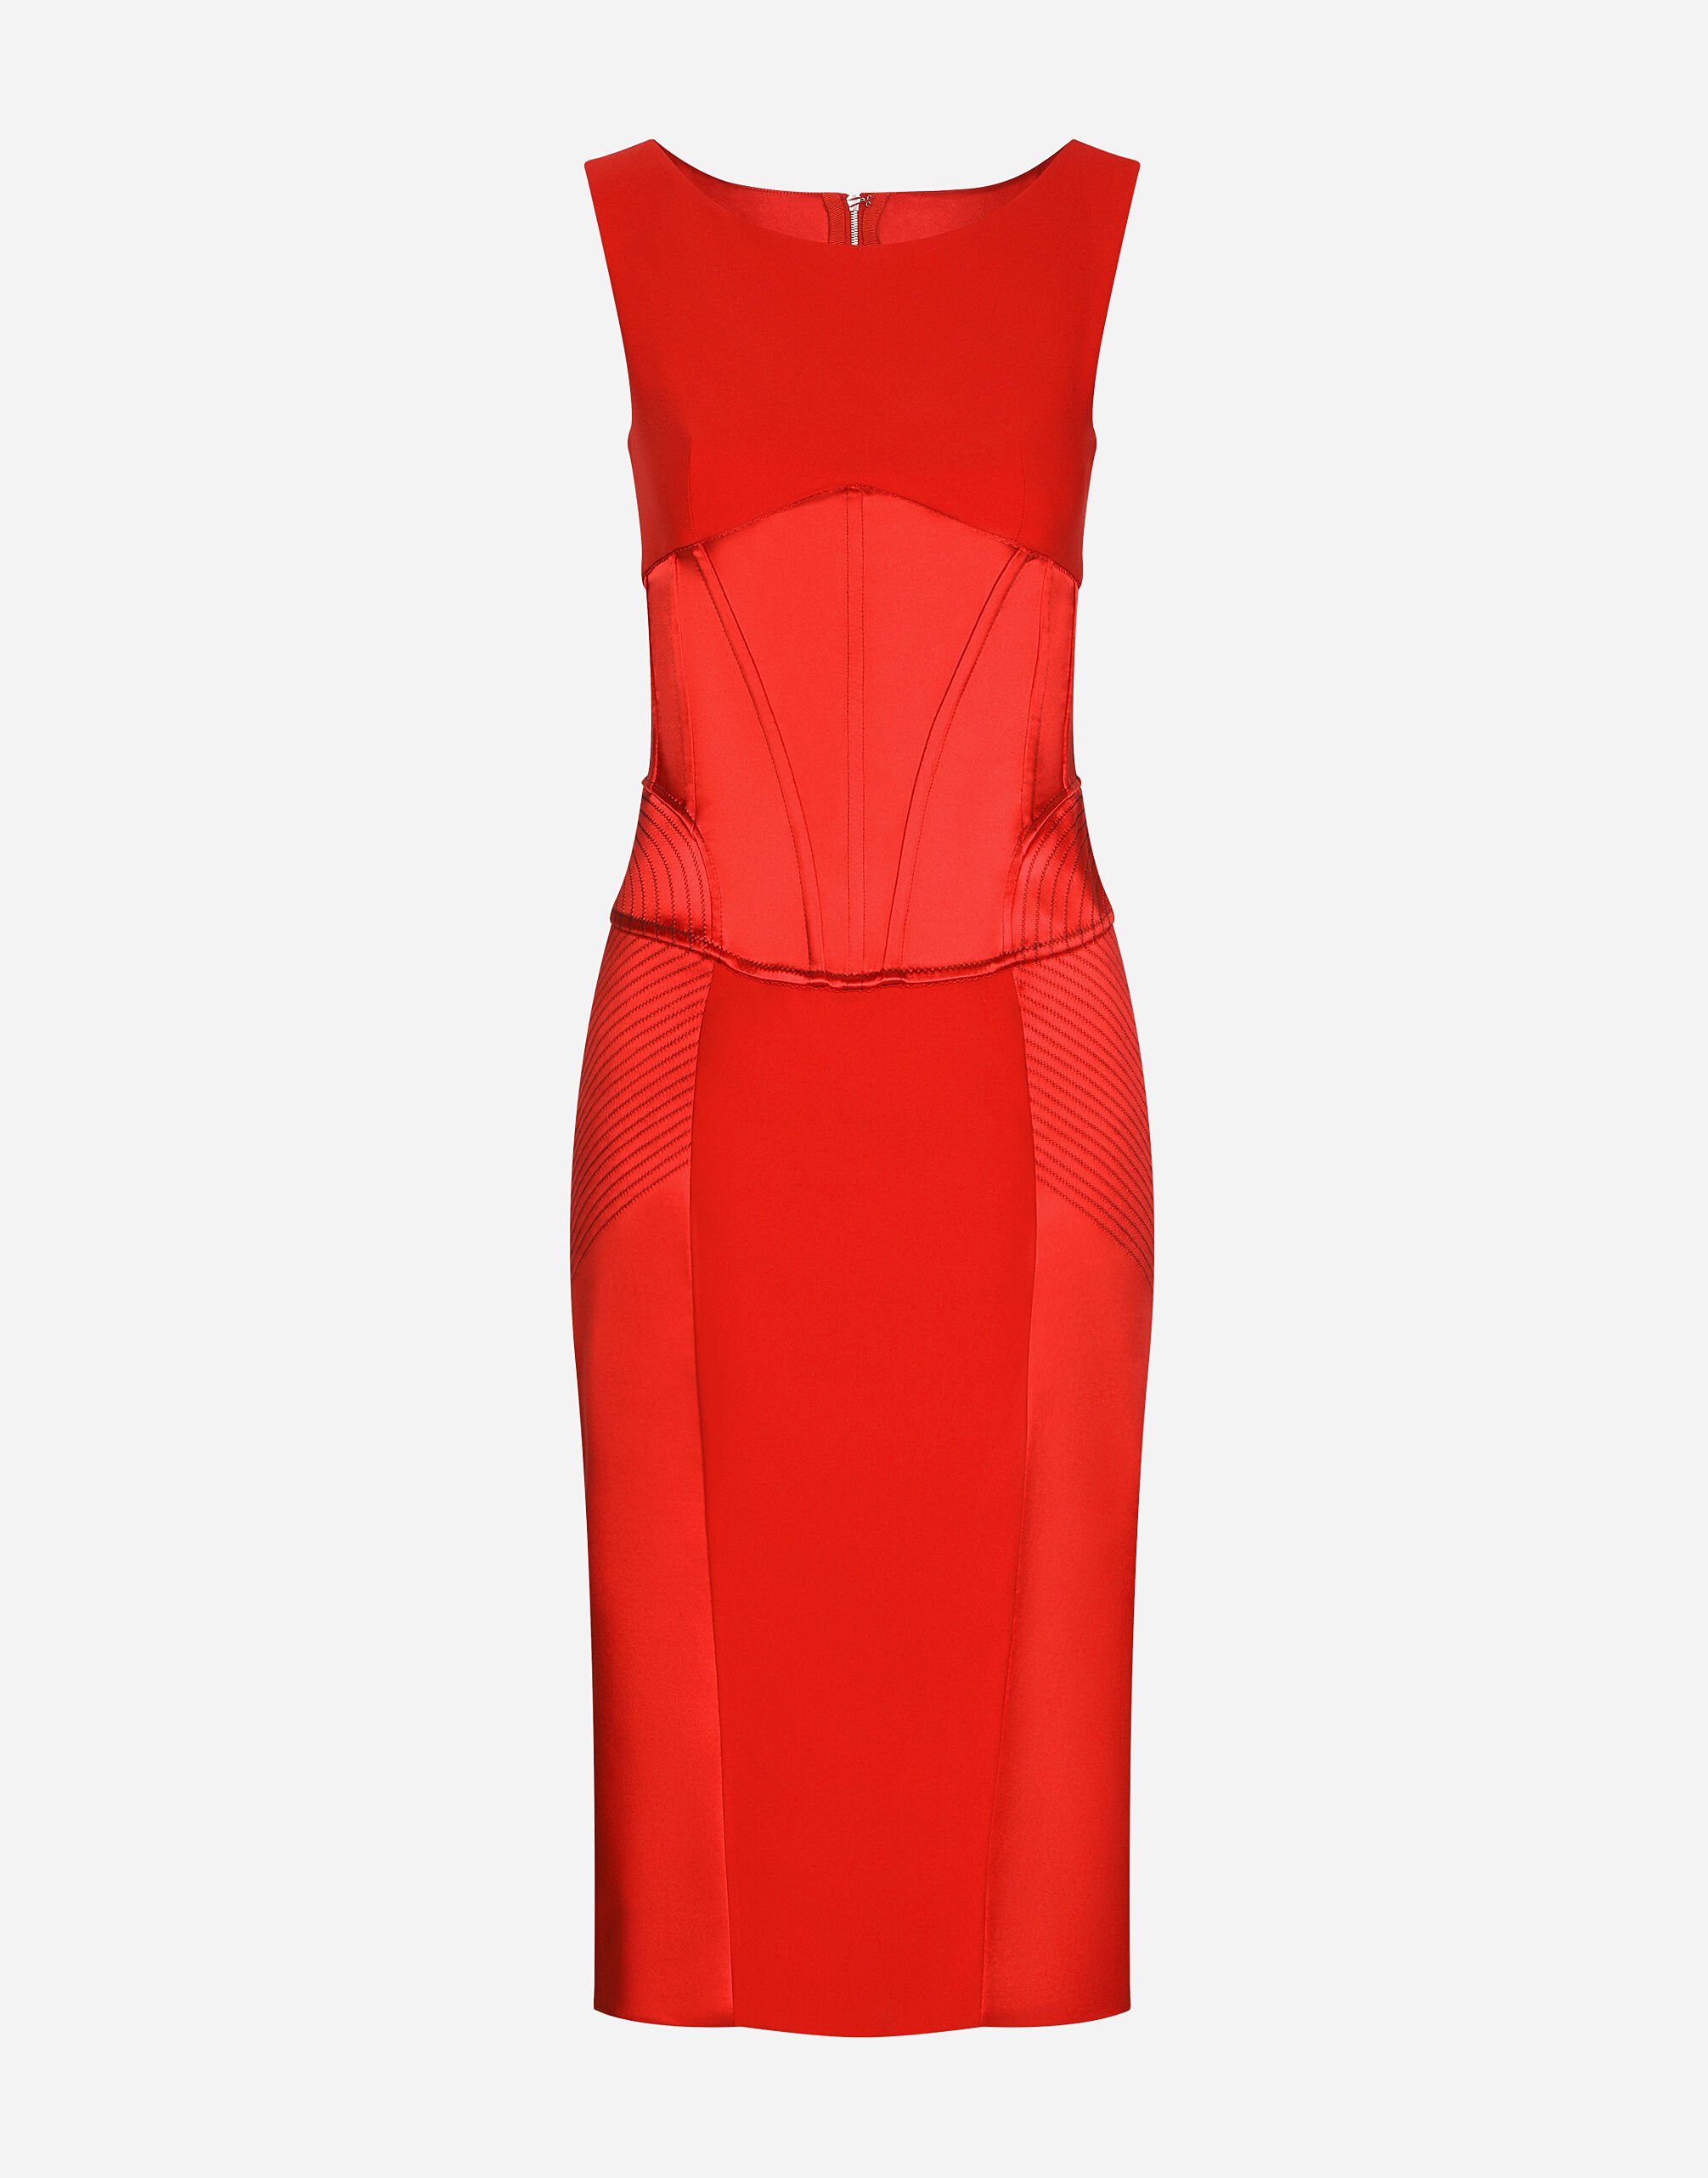 Dolce&Gabbana Satin and cady calf-length dress Red F79BUTFURHM